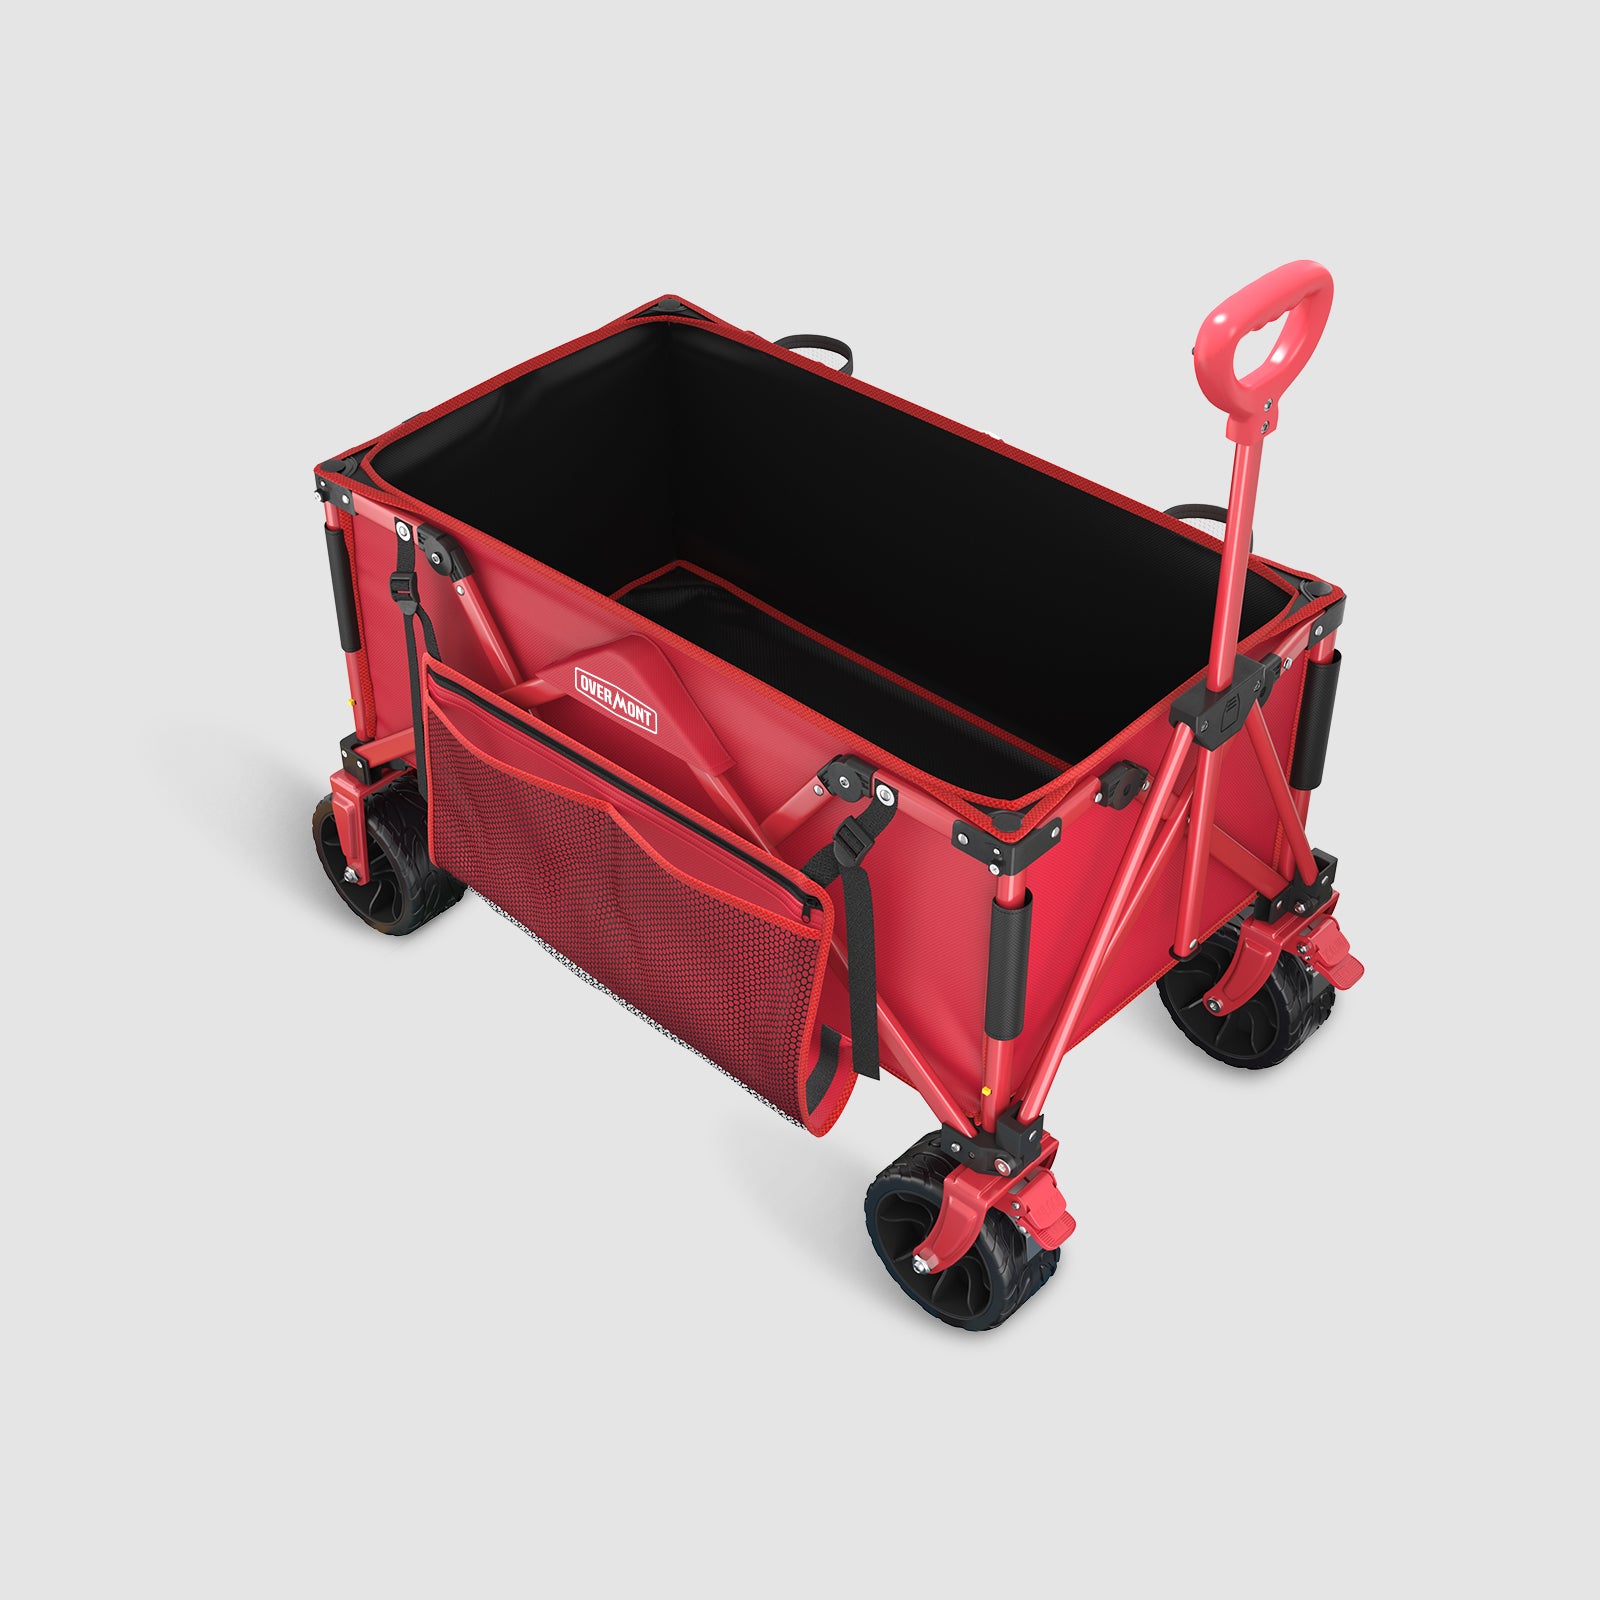 3.2 In wheel red folding wagon 